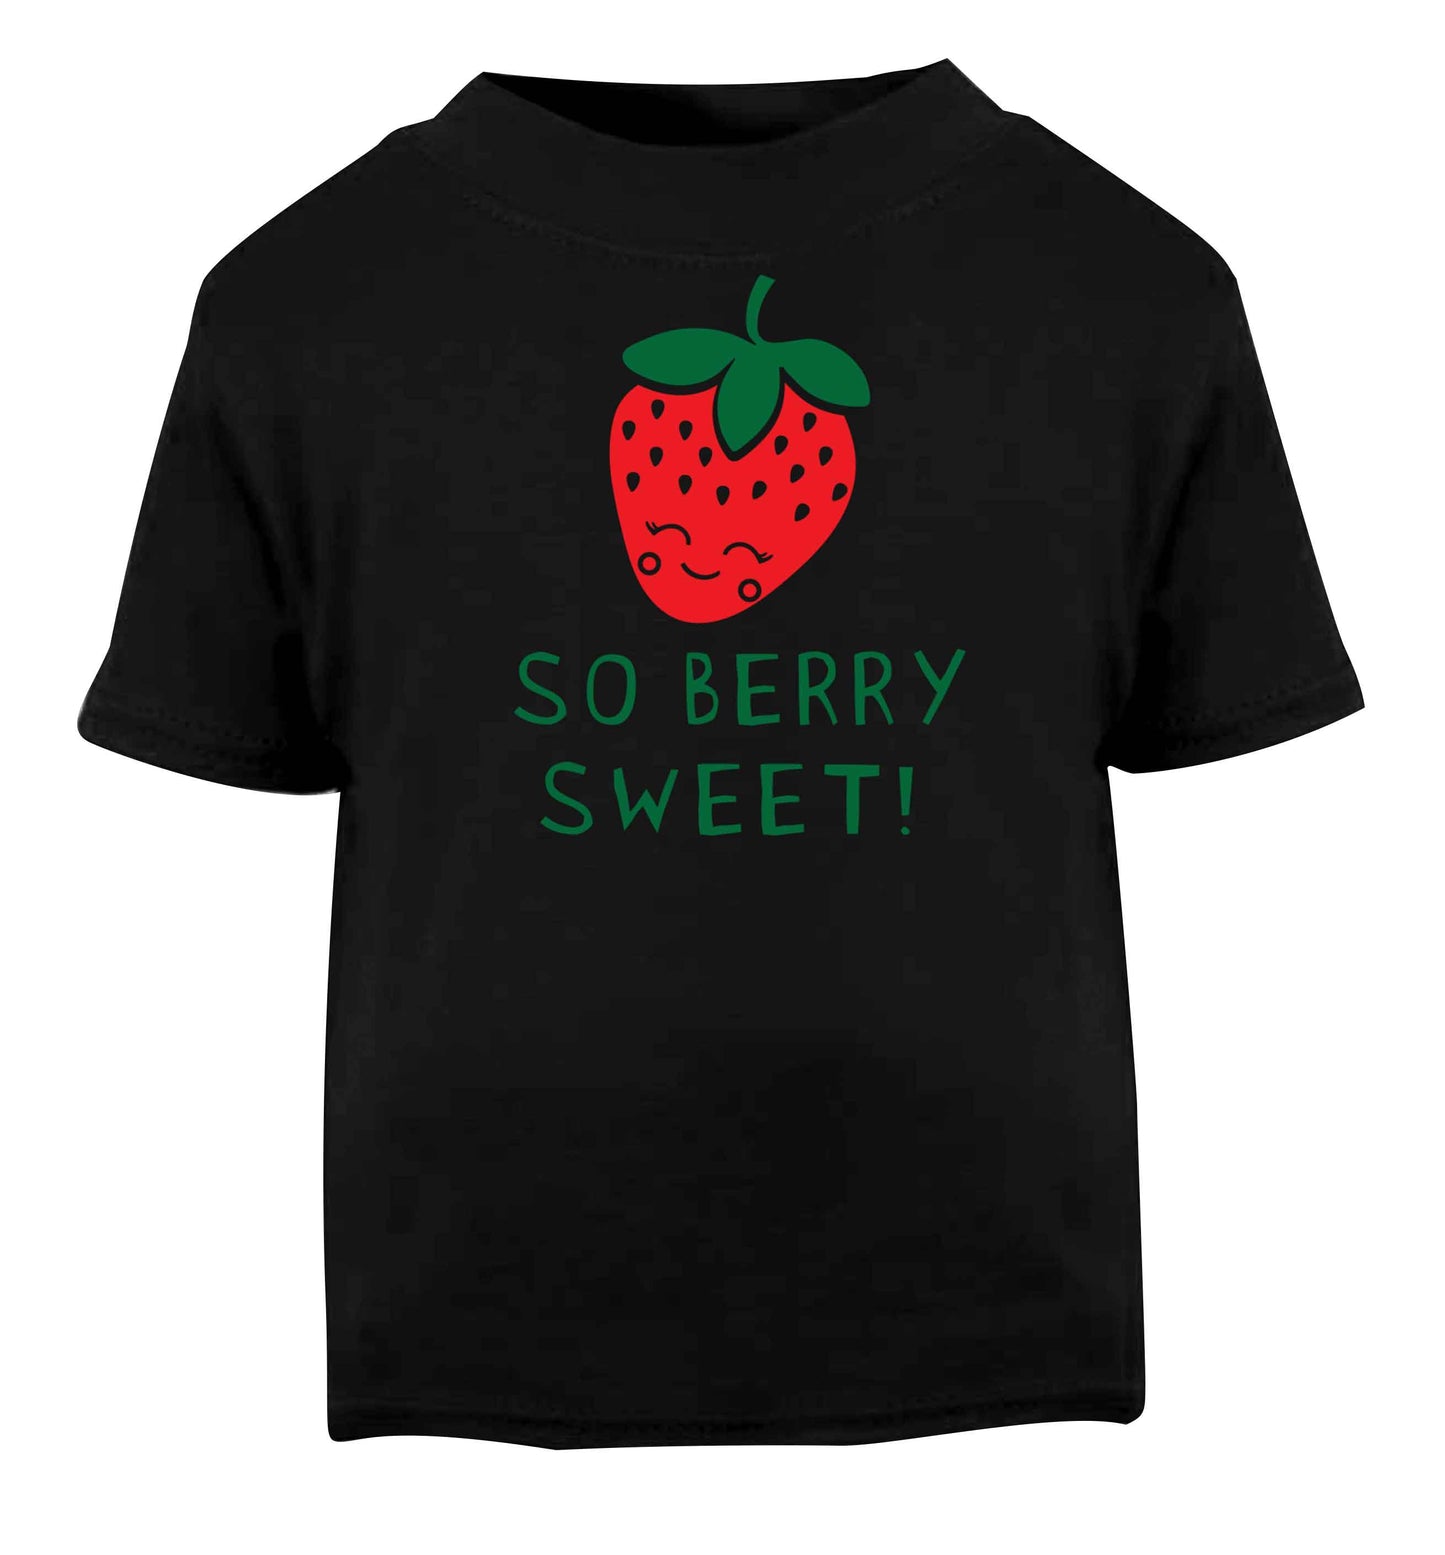 So berry sweet Black baby toddler Tshirt 2 years